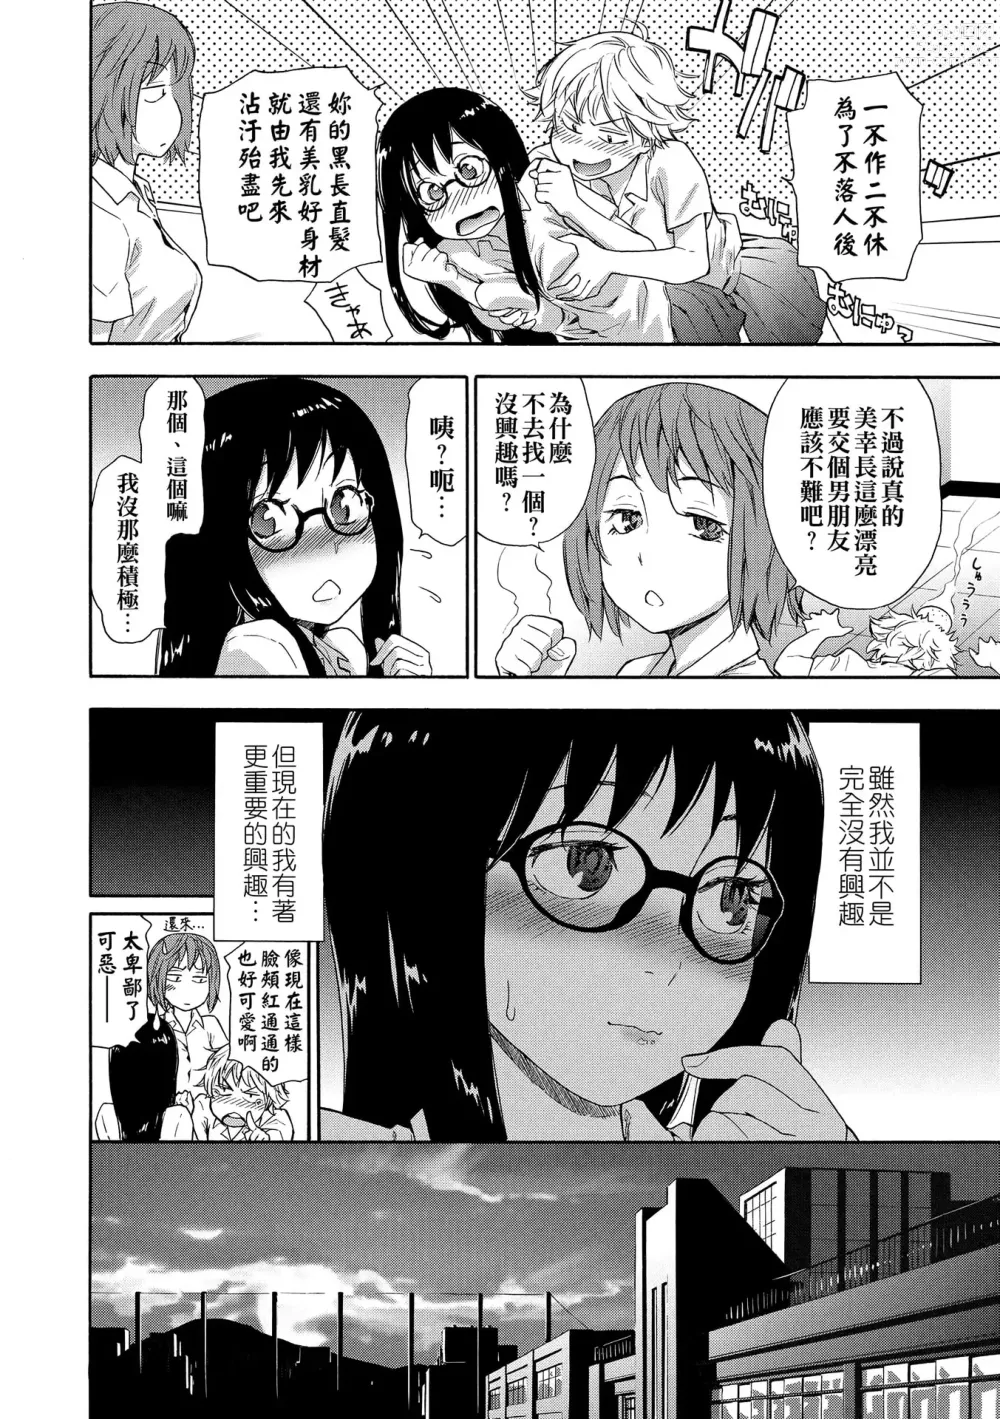 Page 8 of manga 甜美香濃的香草精華 (uncensored)